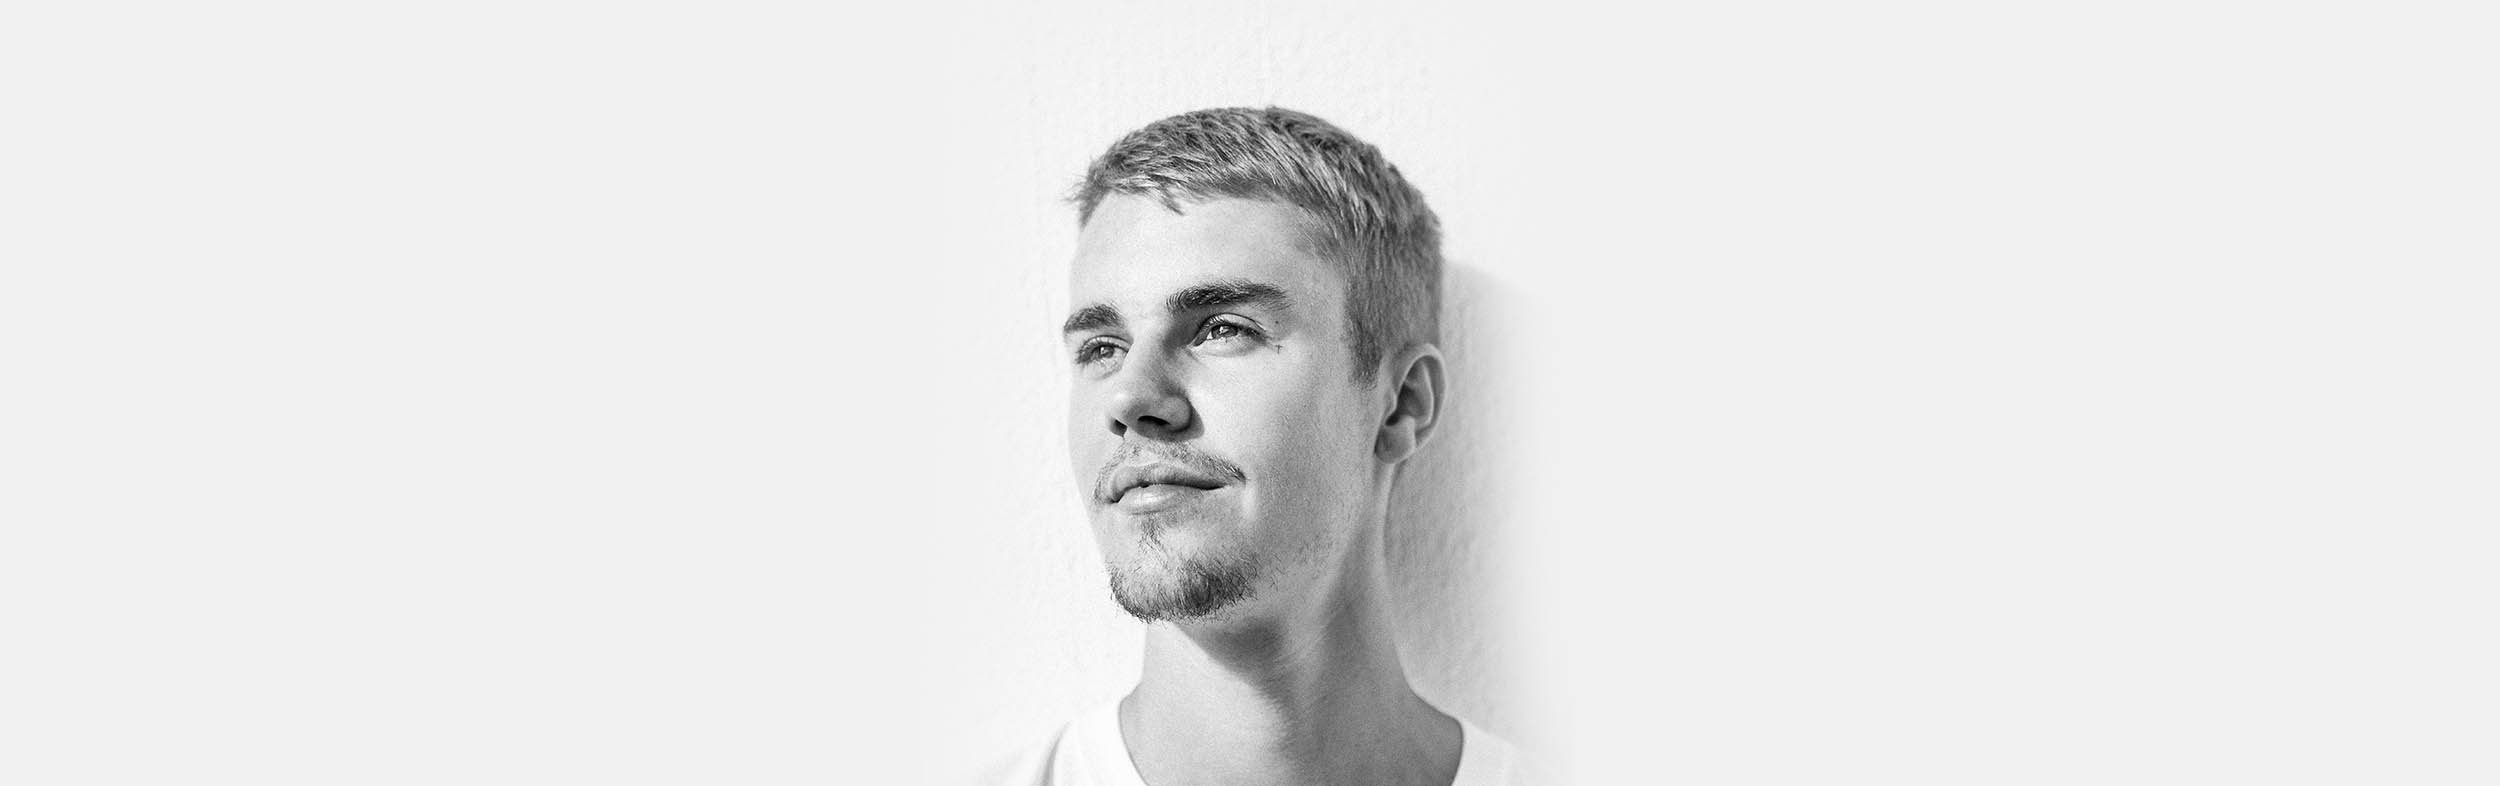 Justin Bieber: discografia, biografia, album e vinili - UMG